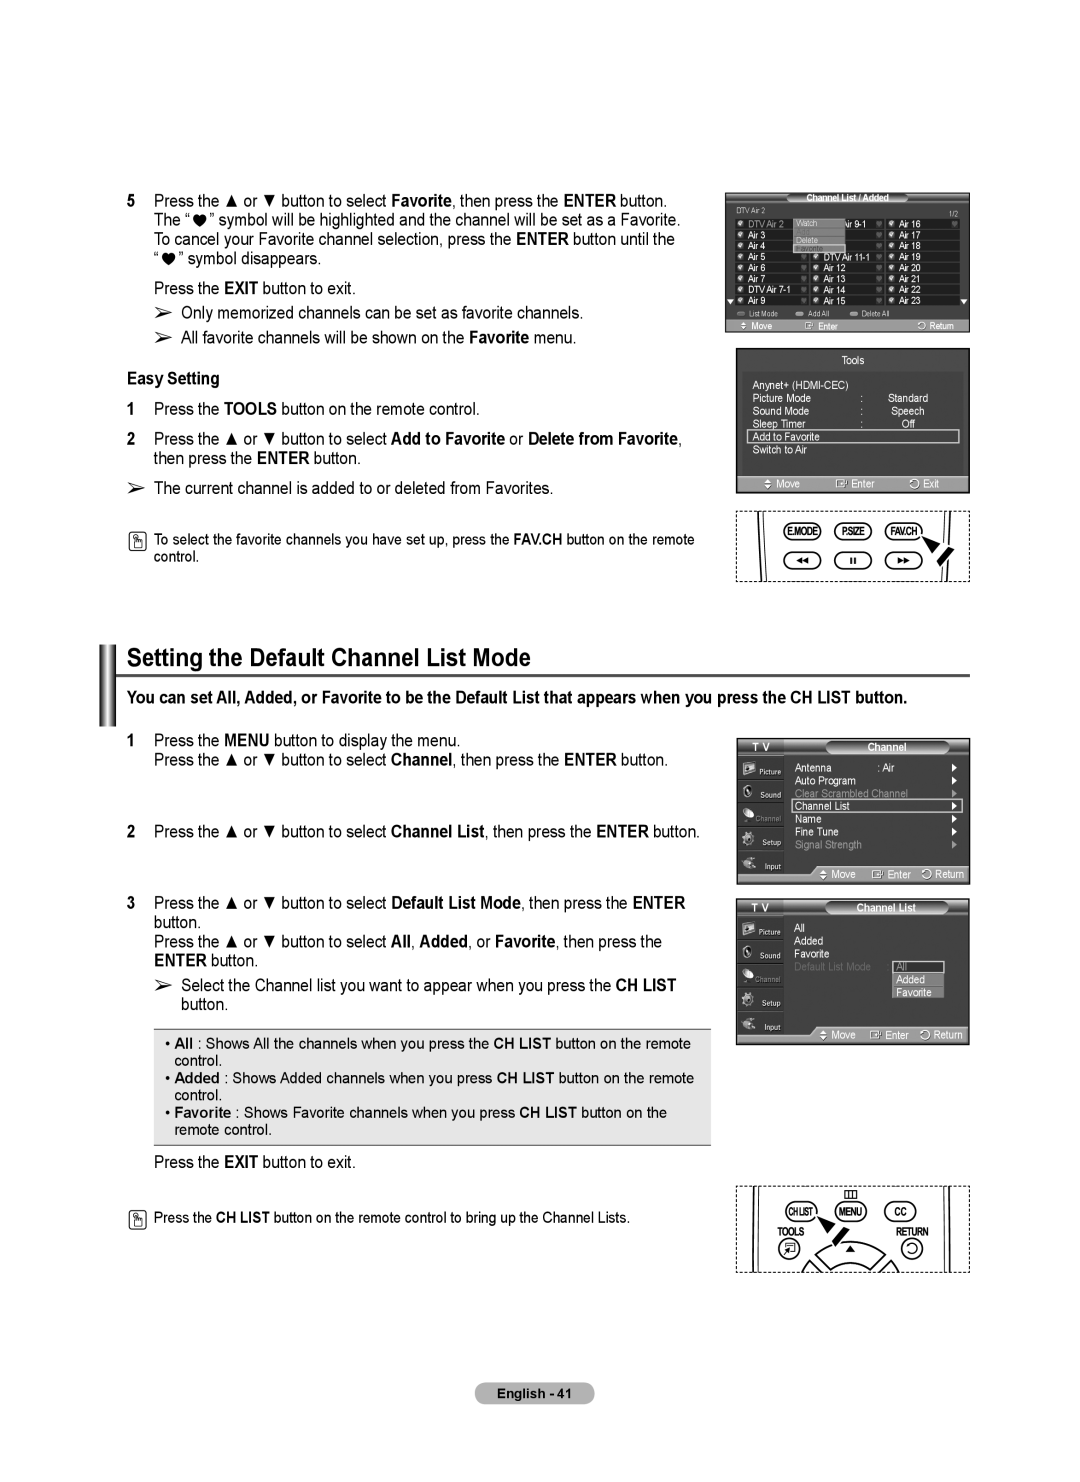 Samsung 460 user manual Setting the Default Channel List Mode, Easy Setting, Default List Mode 